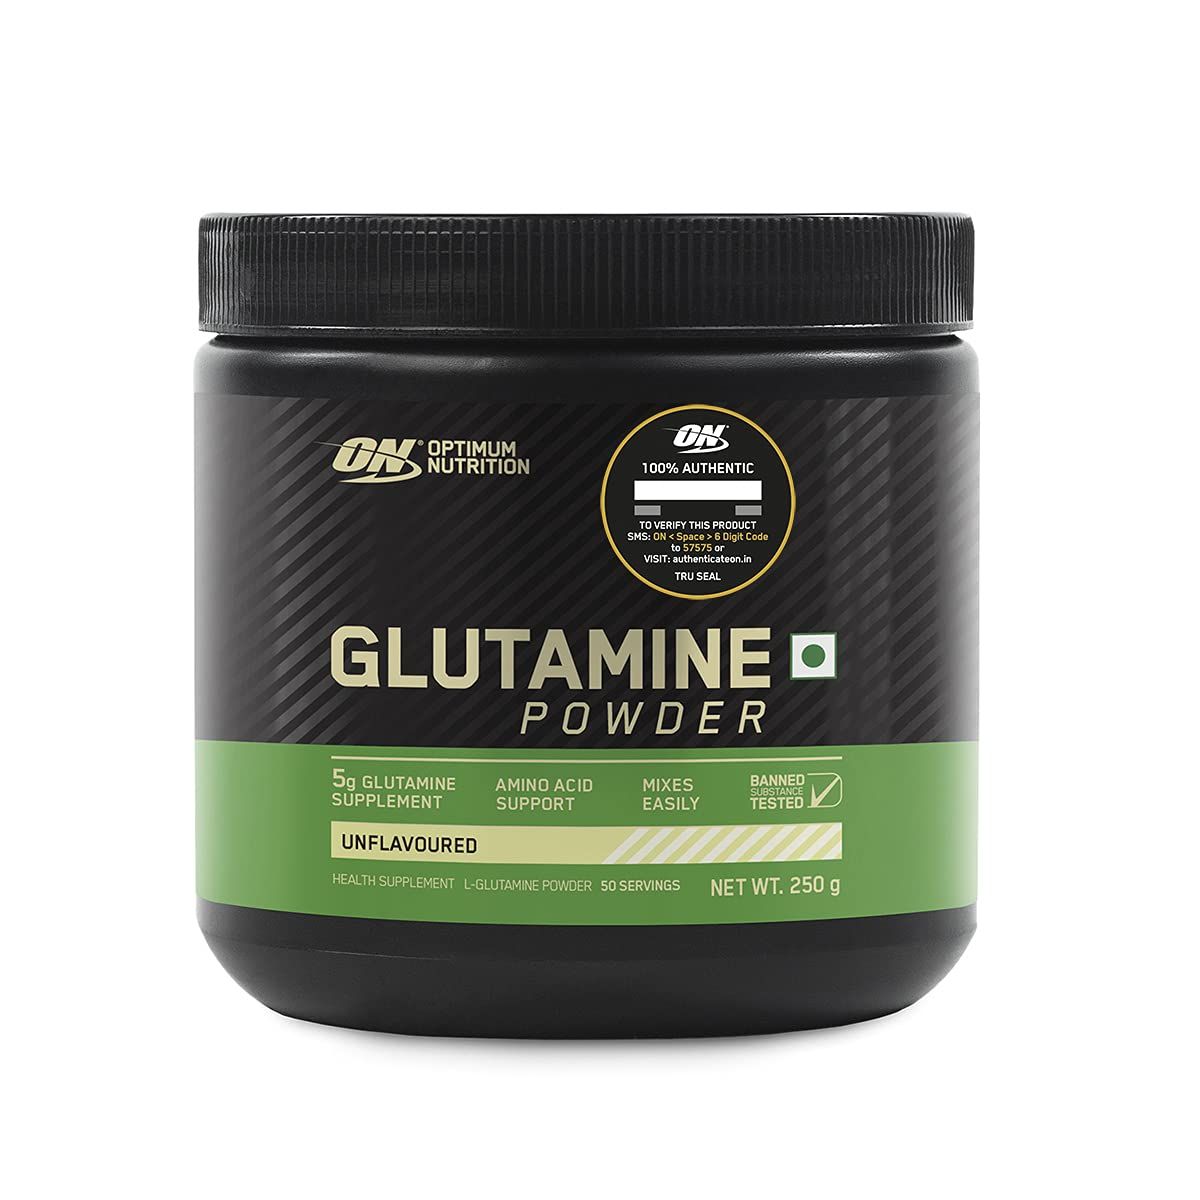 Optimum Nutrition Glutamine Powder Image